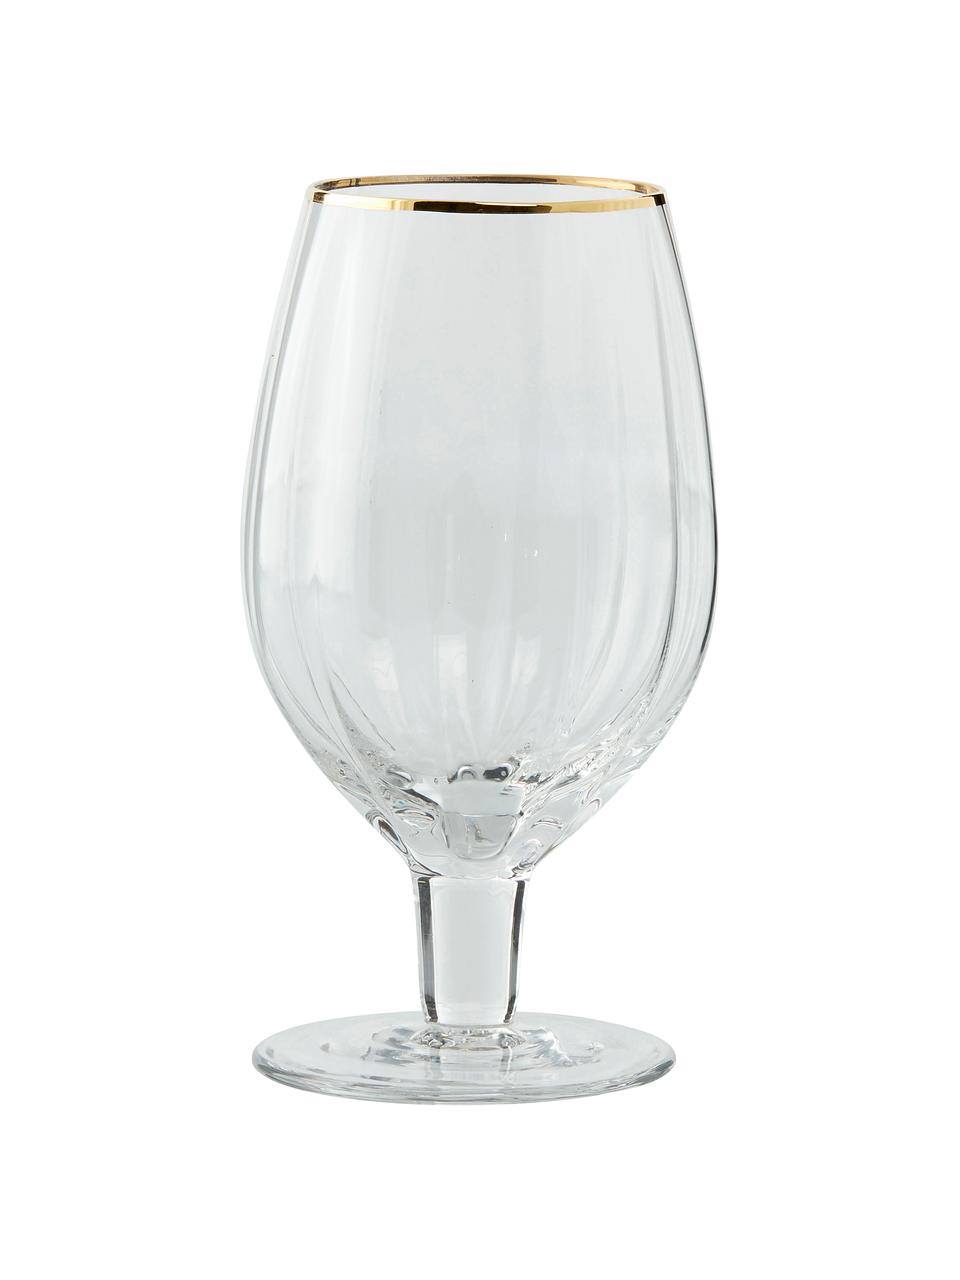 Set van 4 bierglazen Claudine, Glas, Transparant, goudkleurig, Ø 10 x H 18 cm, 580 ml